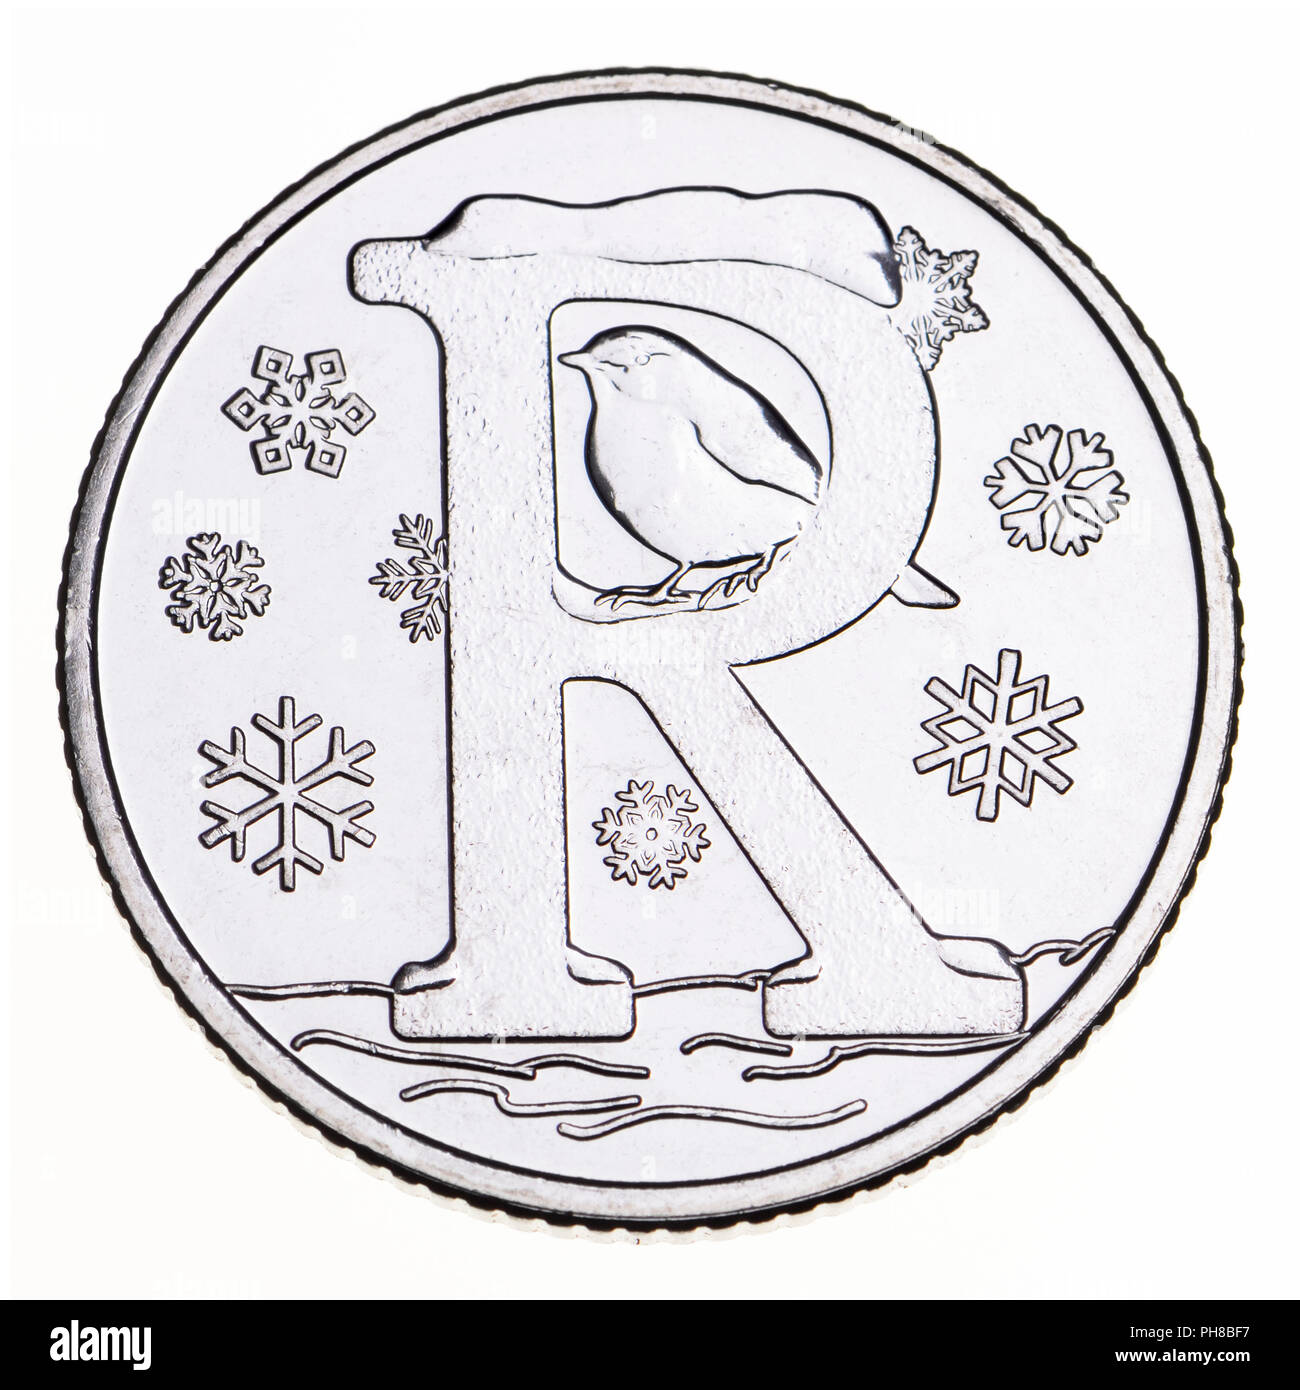 British 10p coin (reverse) from 2018 'Alphabet' series, celebrating Britishness. R - Robin Stock Photo